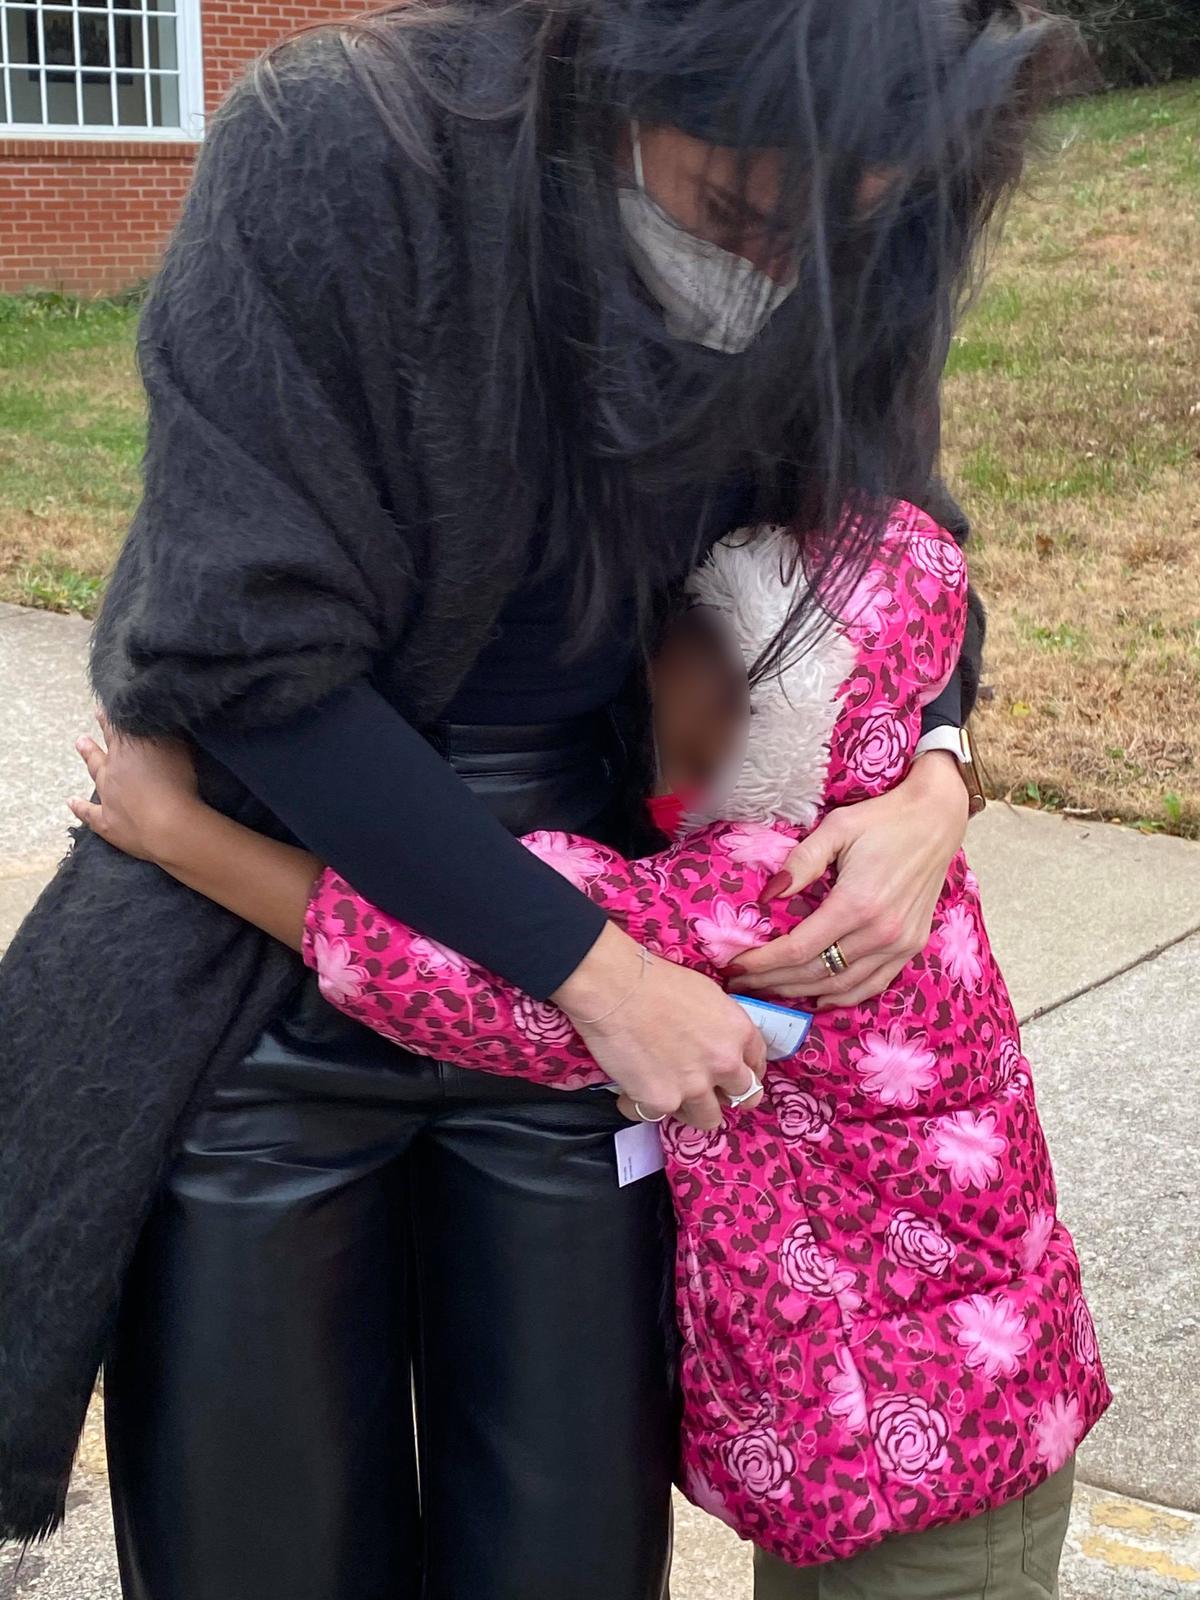 The little girl hugging her school principal. (Courtesy of <a href="https://www.facebook.com/monet.bartell.7">Monet Bartell</a>)